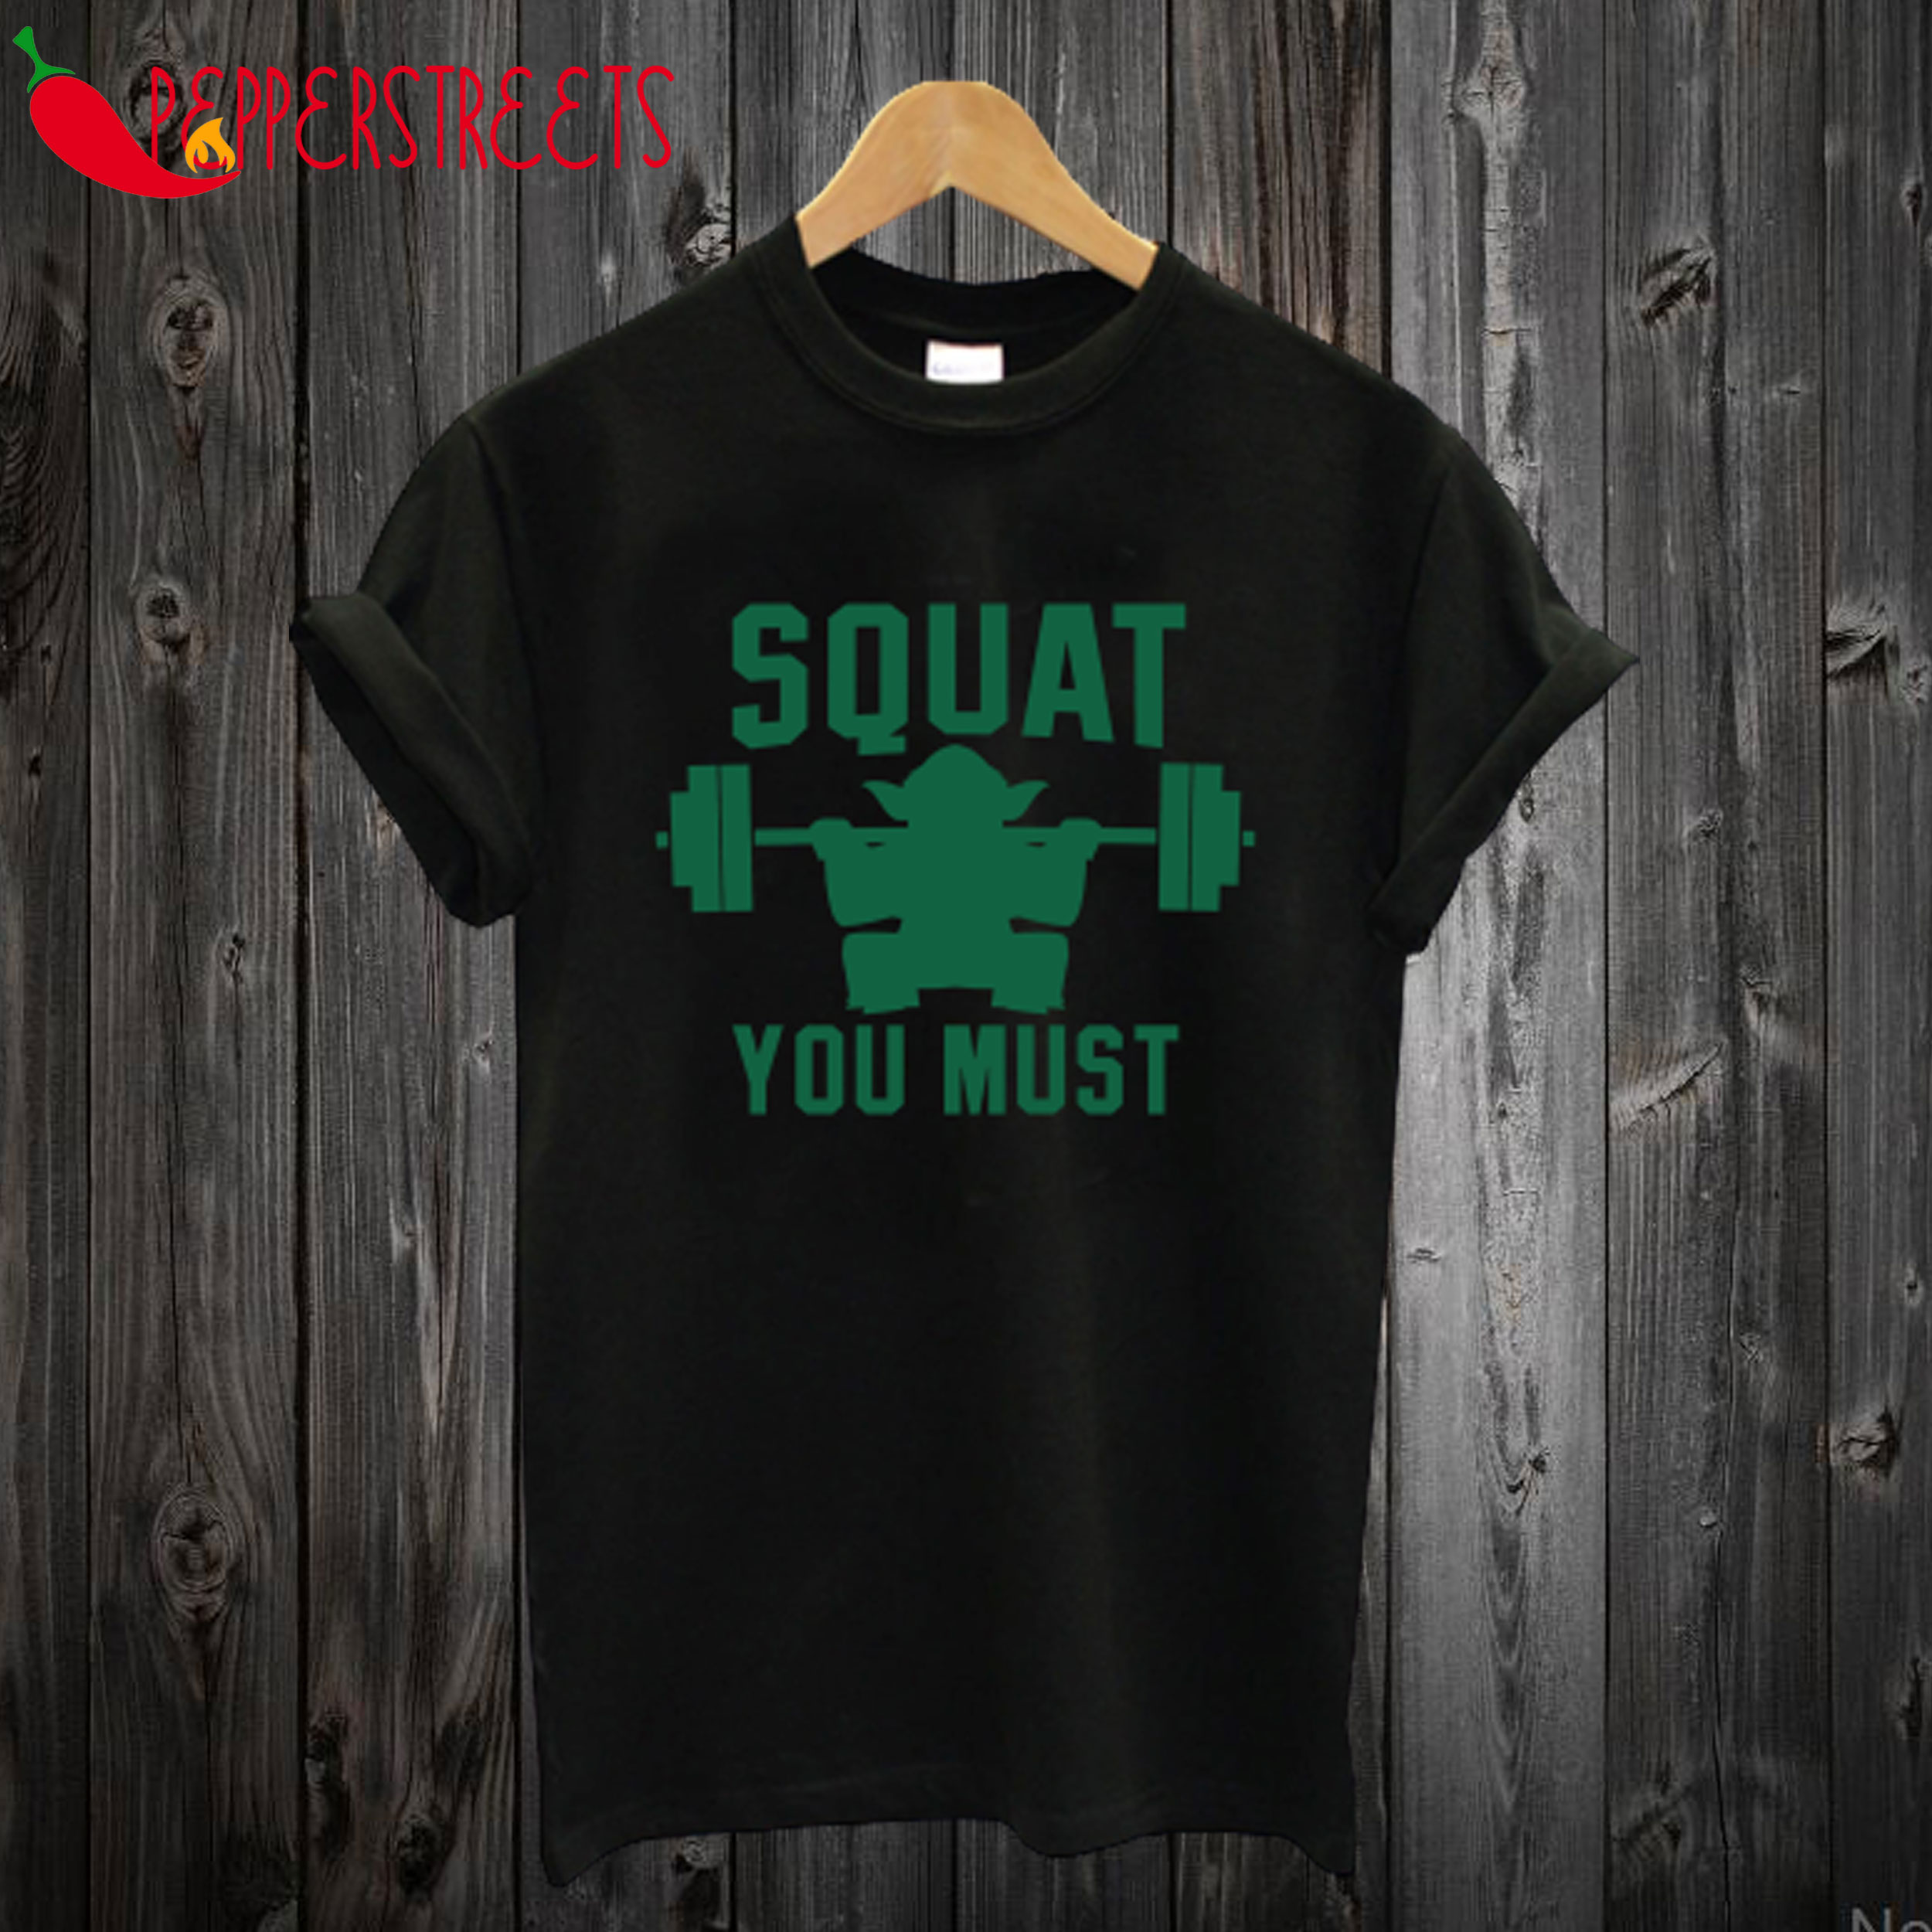 Squat You Must T-Shirt